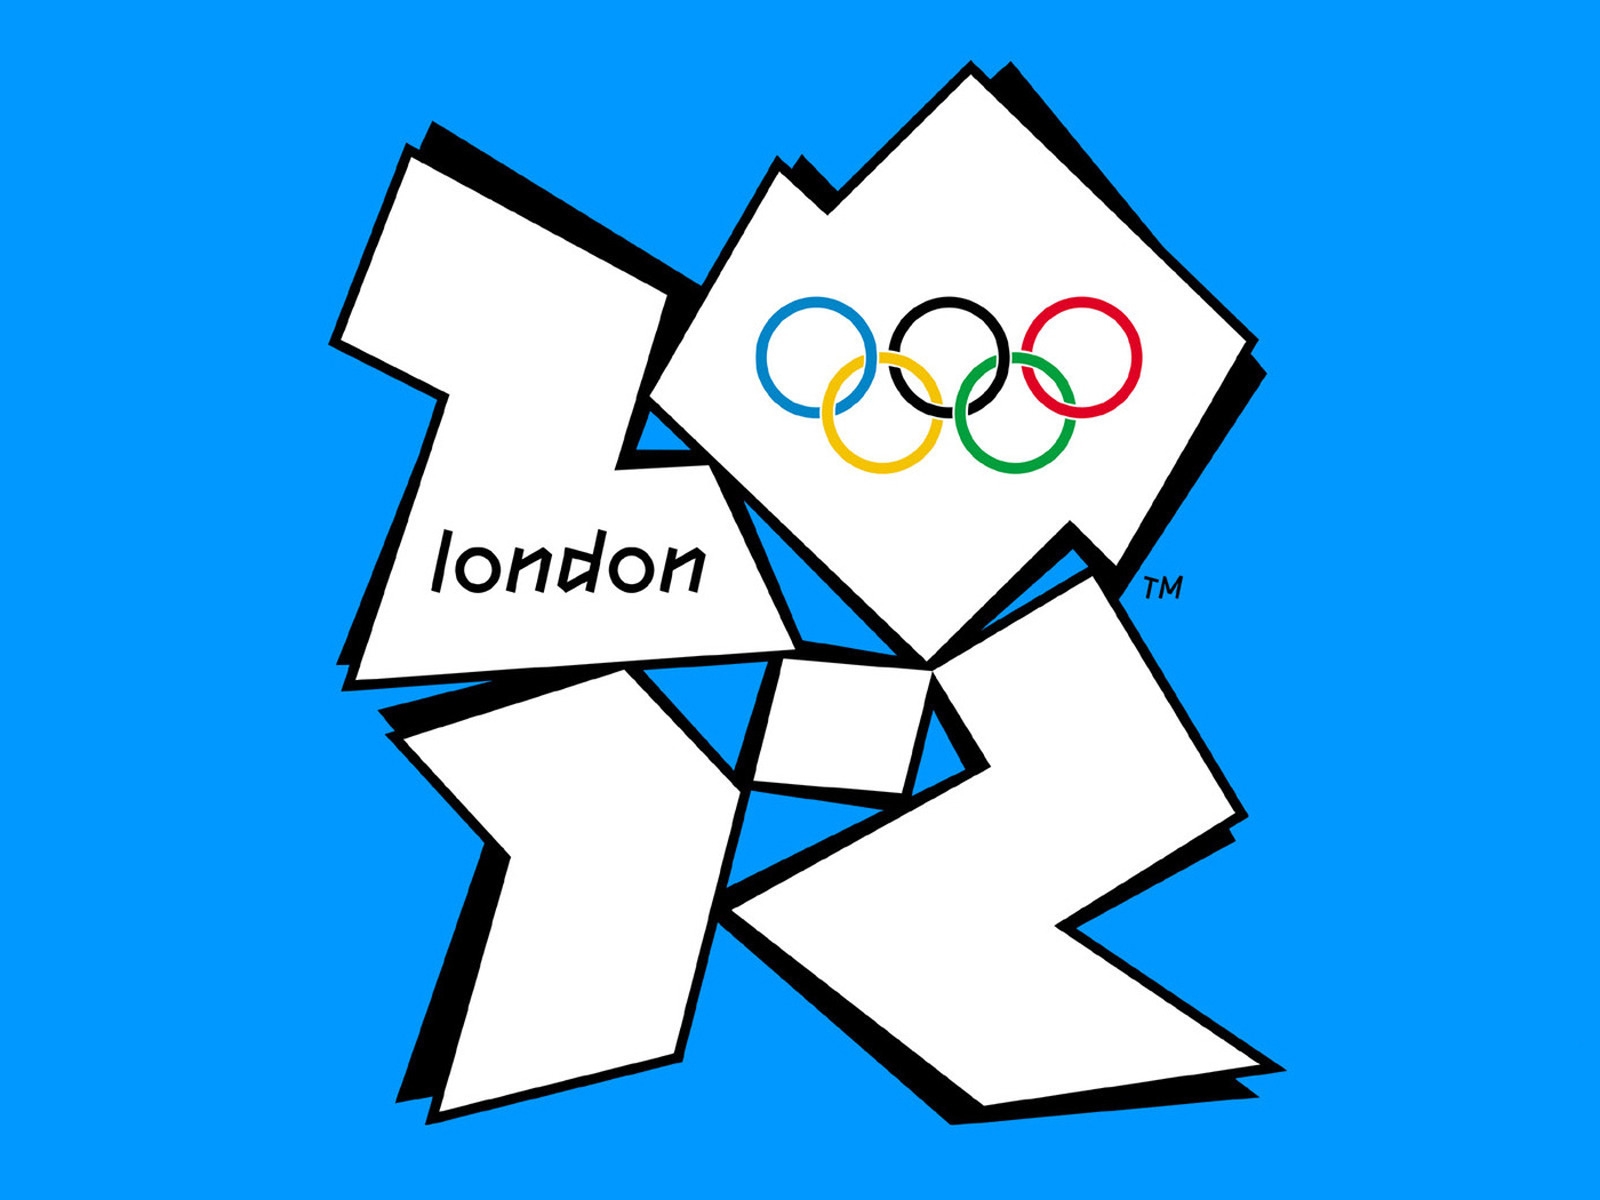 London 2012 Olympics Logo for 1600 x 1200 resolution